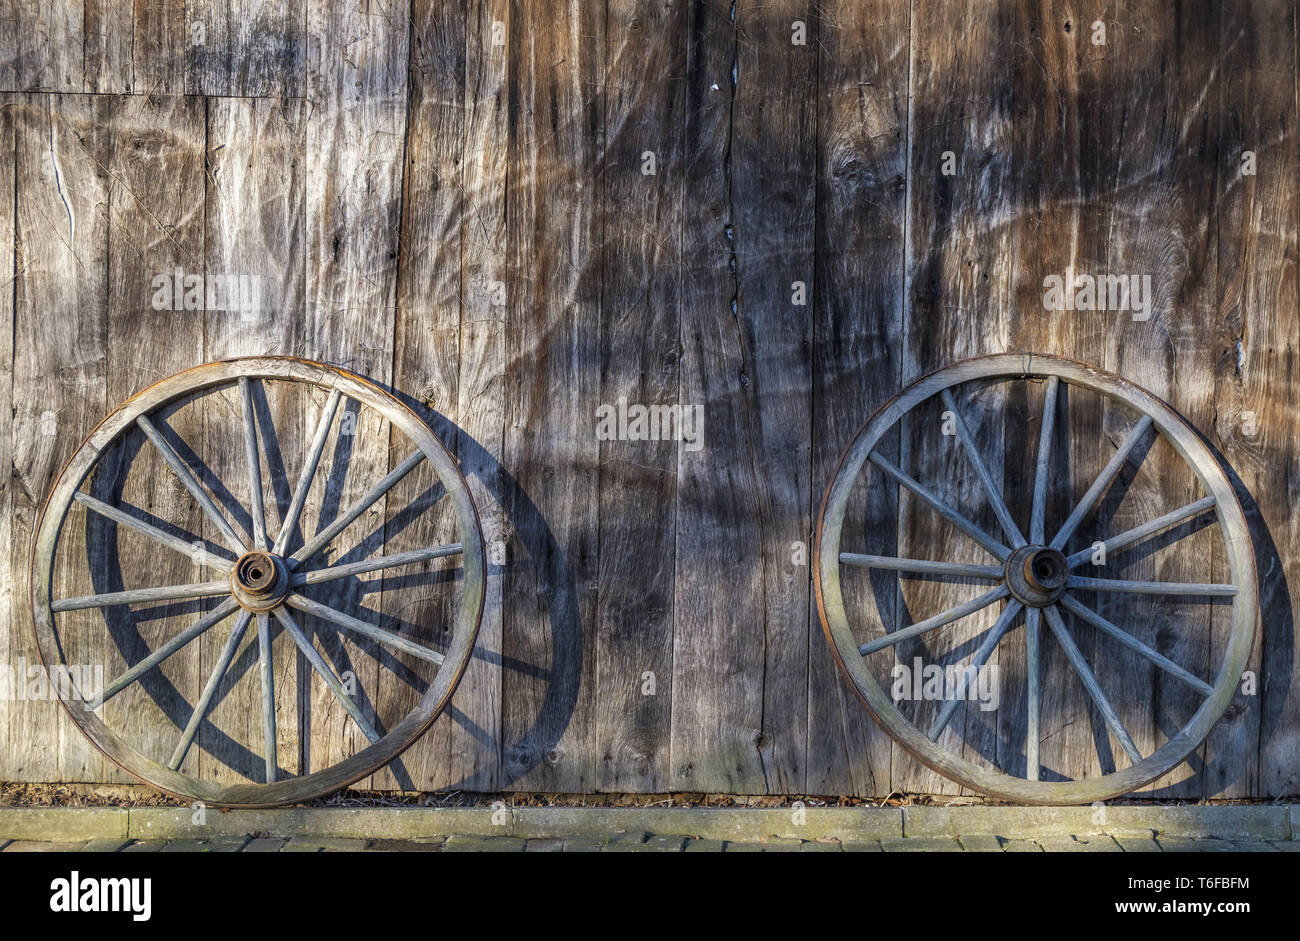 Two cartwheels lean against a barn wall Stock Photo